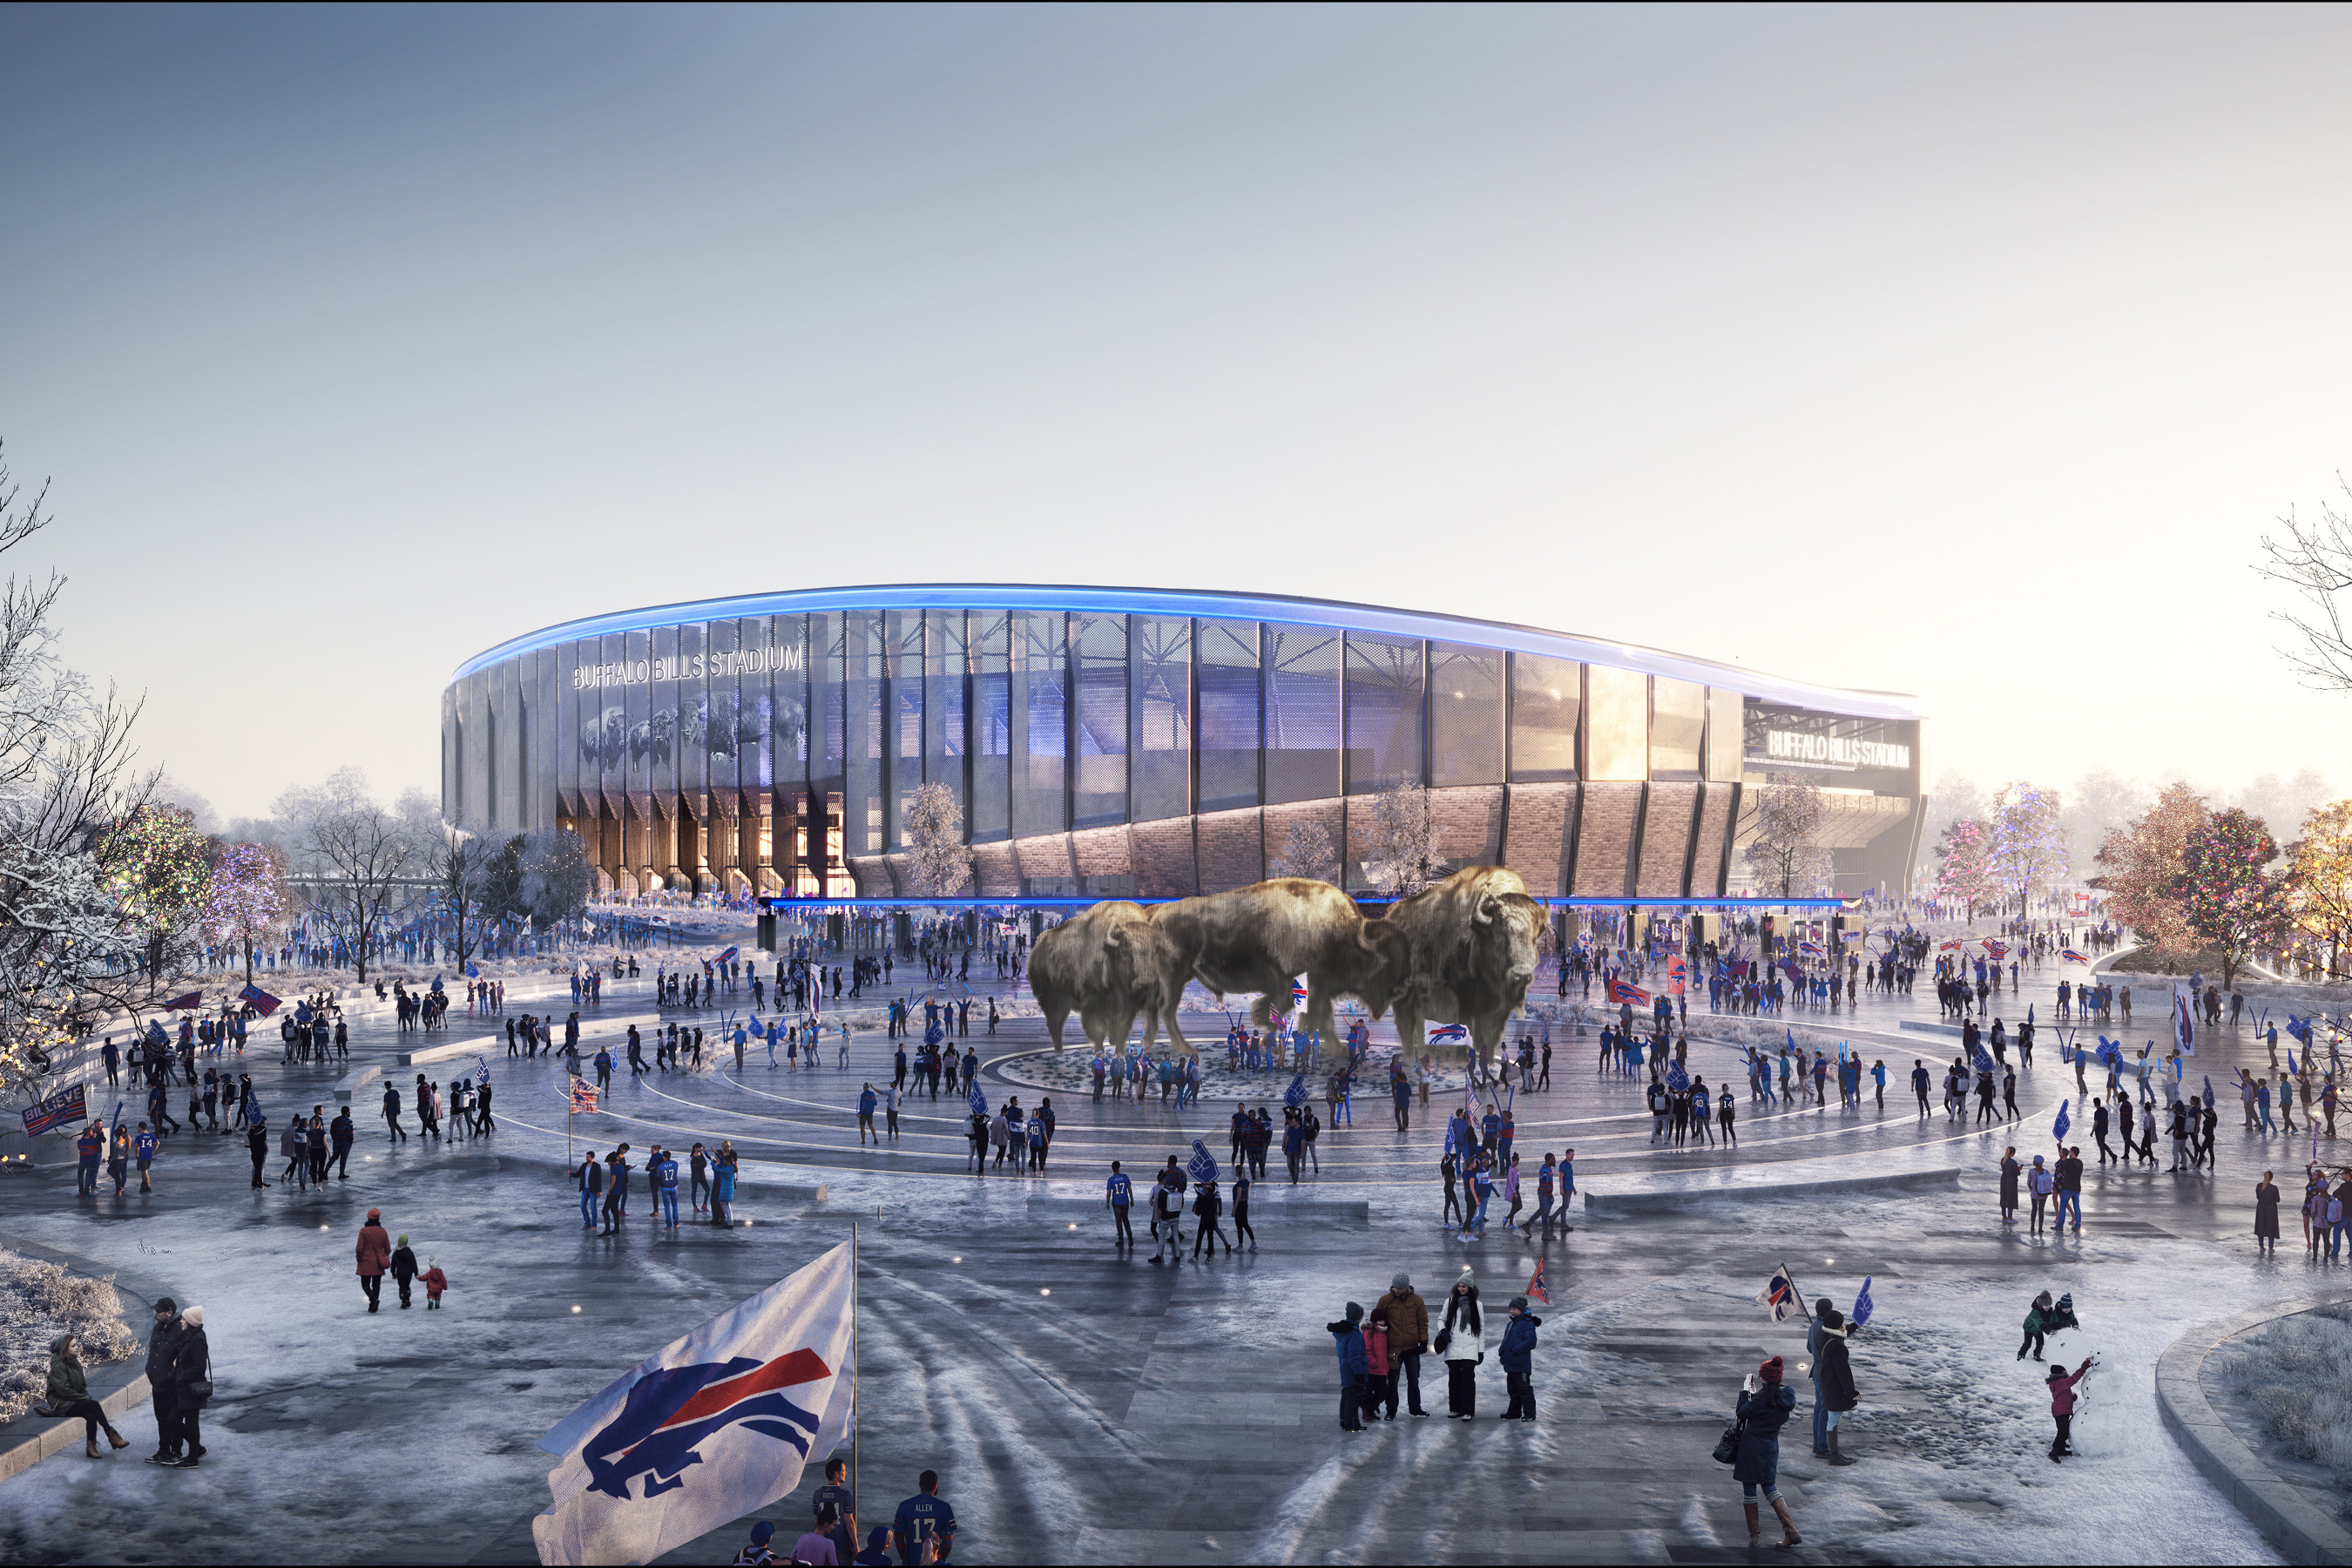 Construction firms for Bills stadium announced